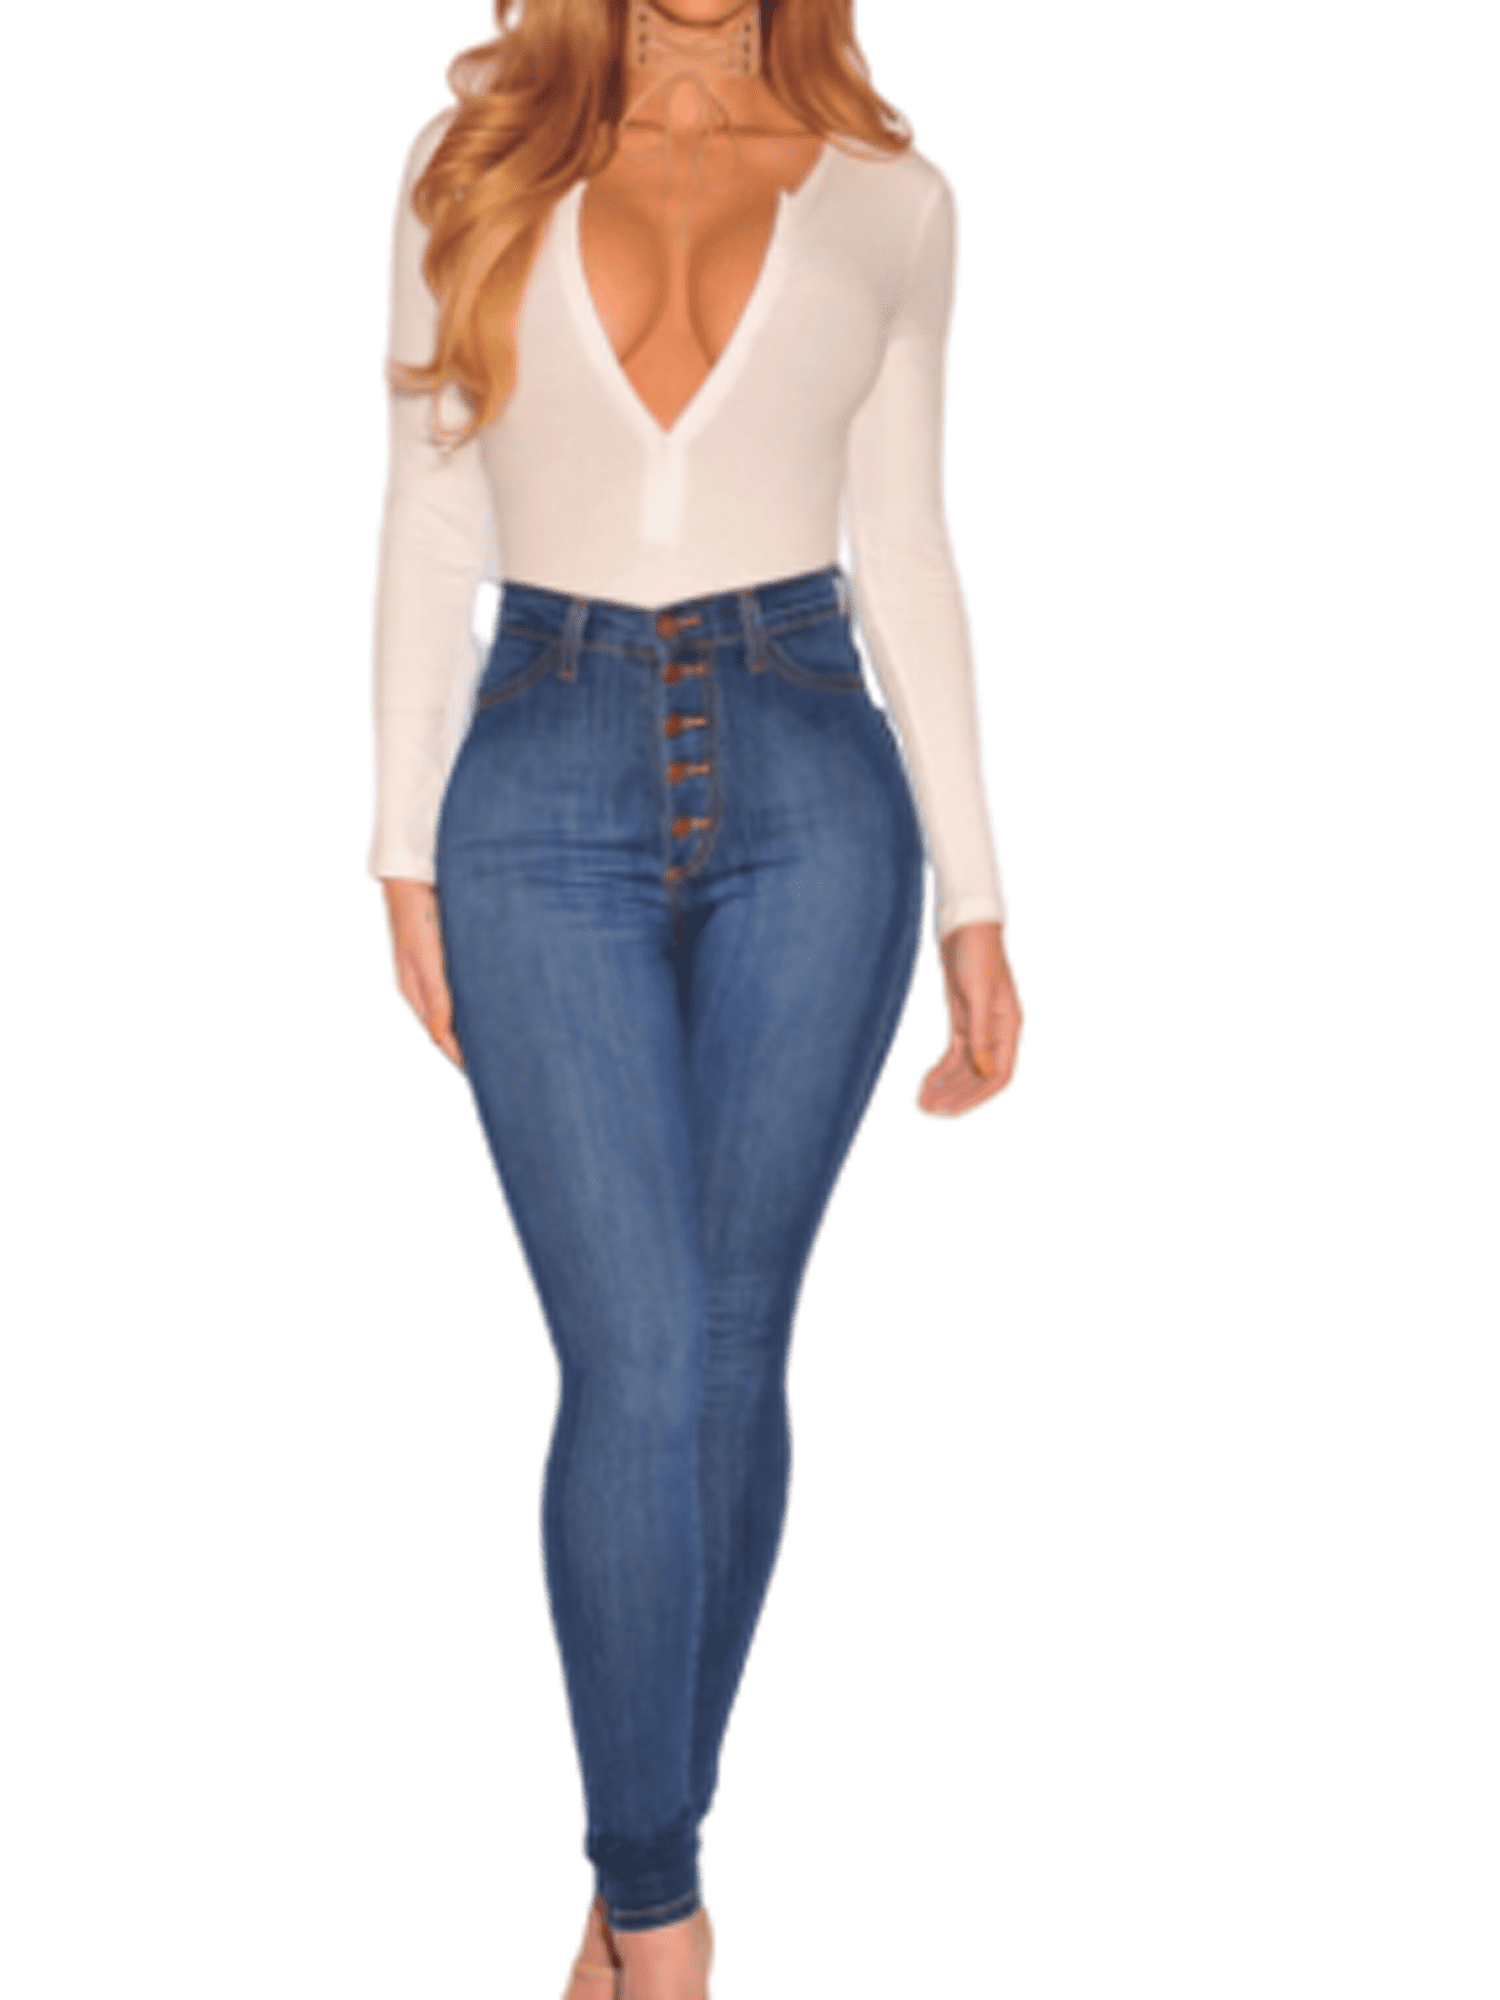 Women High Waisted Denim Skinny Jeans Jeggjins Stretch Long Pants SIZE 6 TOCA 